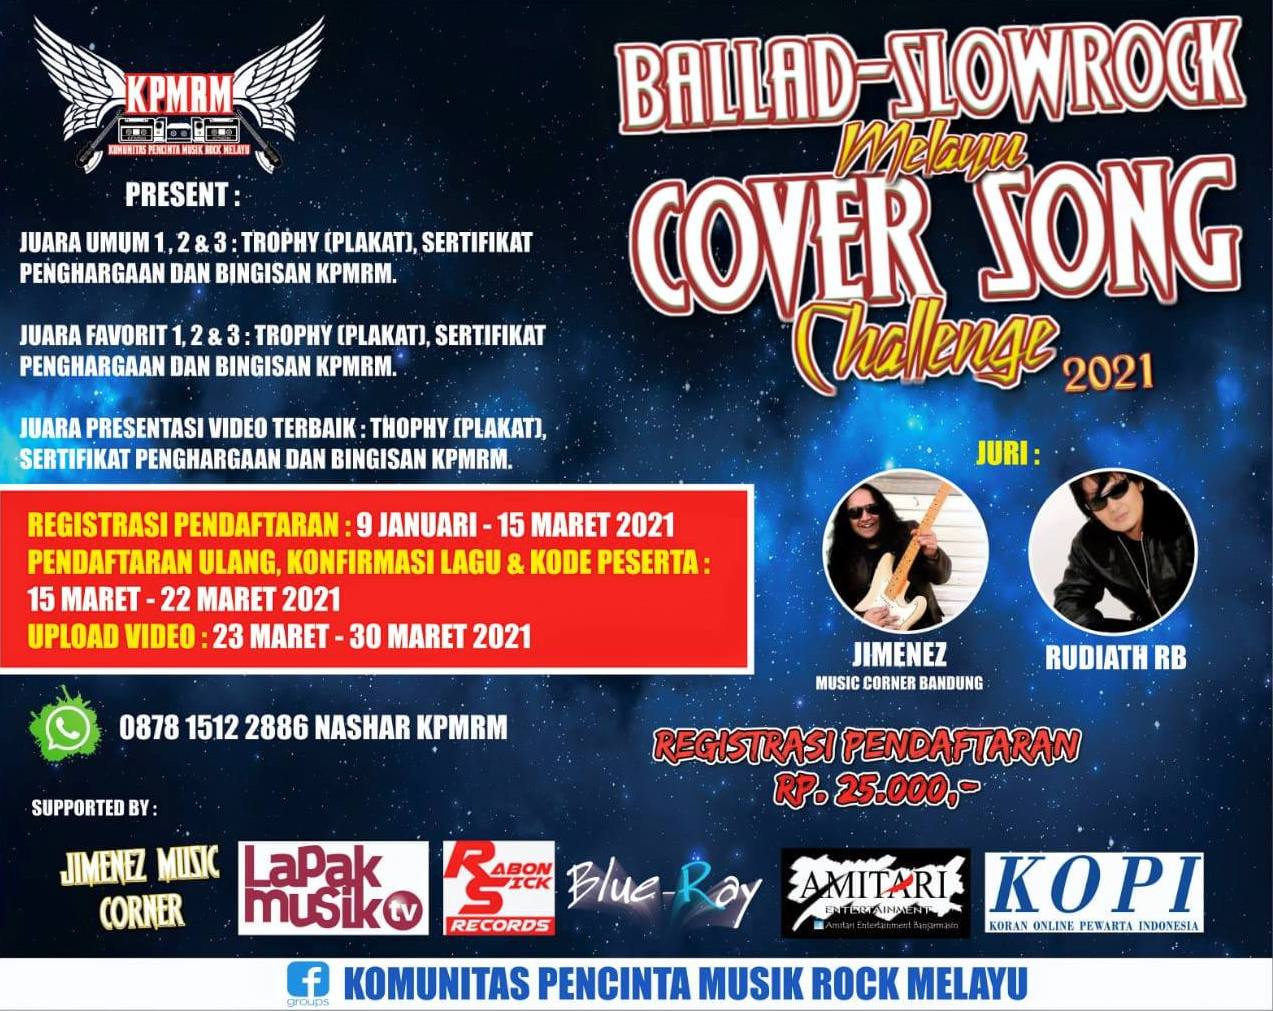 Ballad - Slow Rock Melayu Cover Song Challenge Tahun 2021